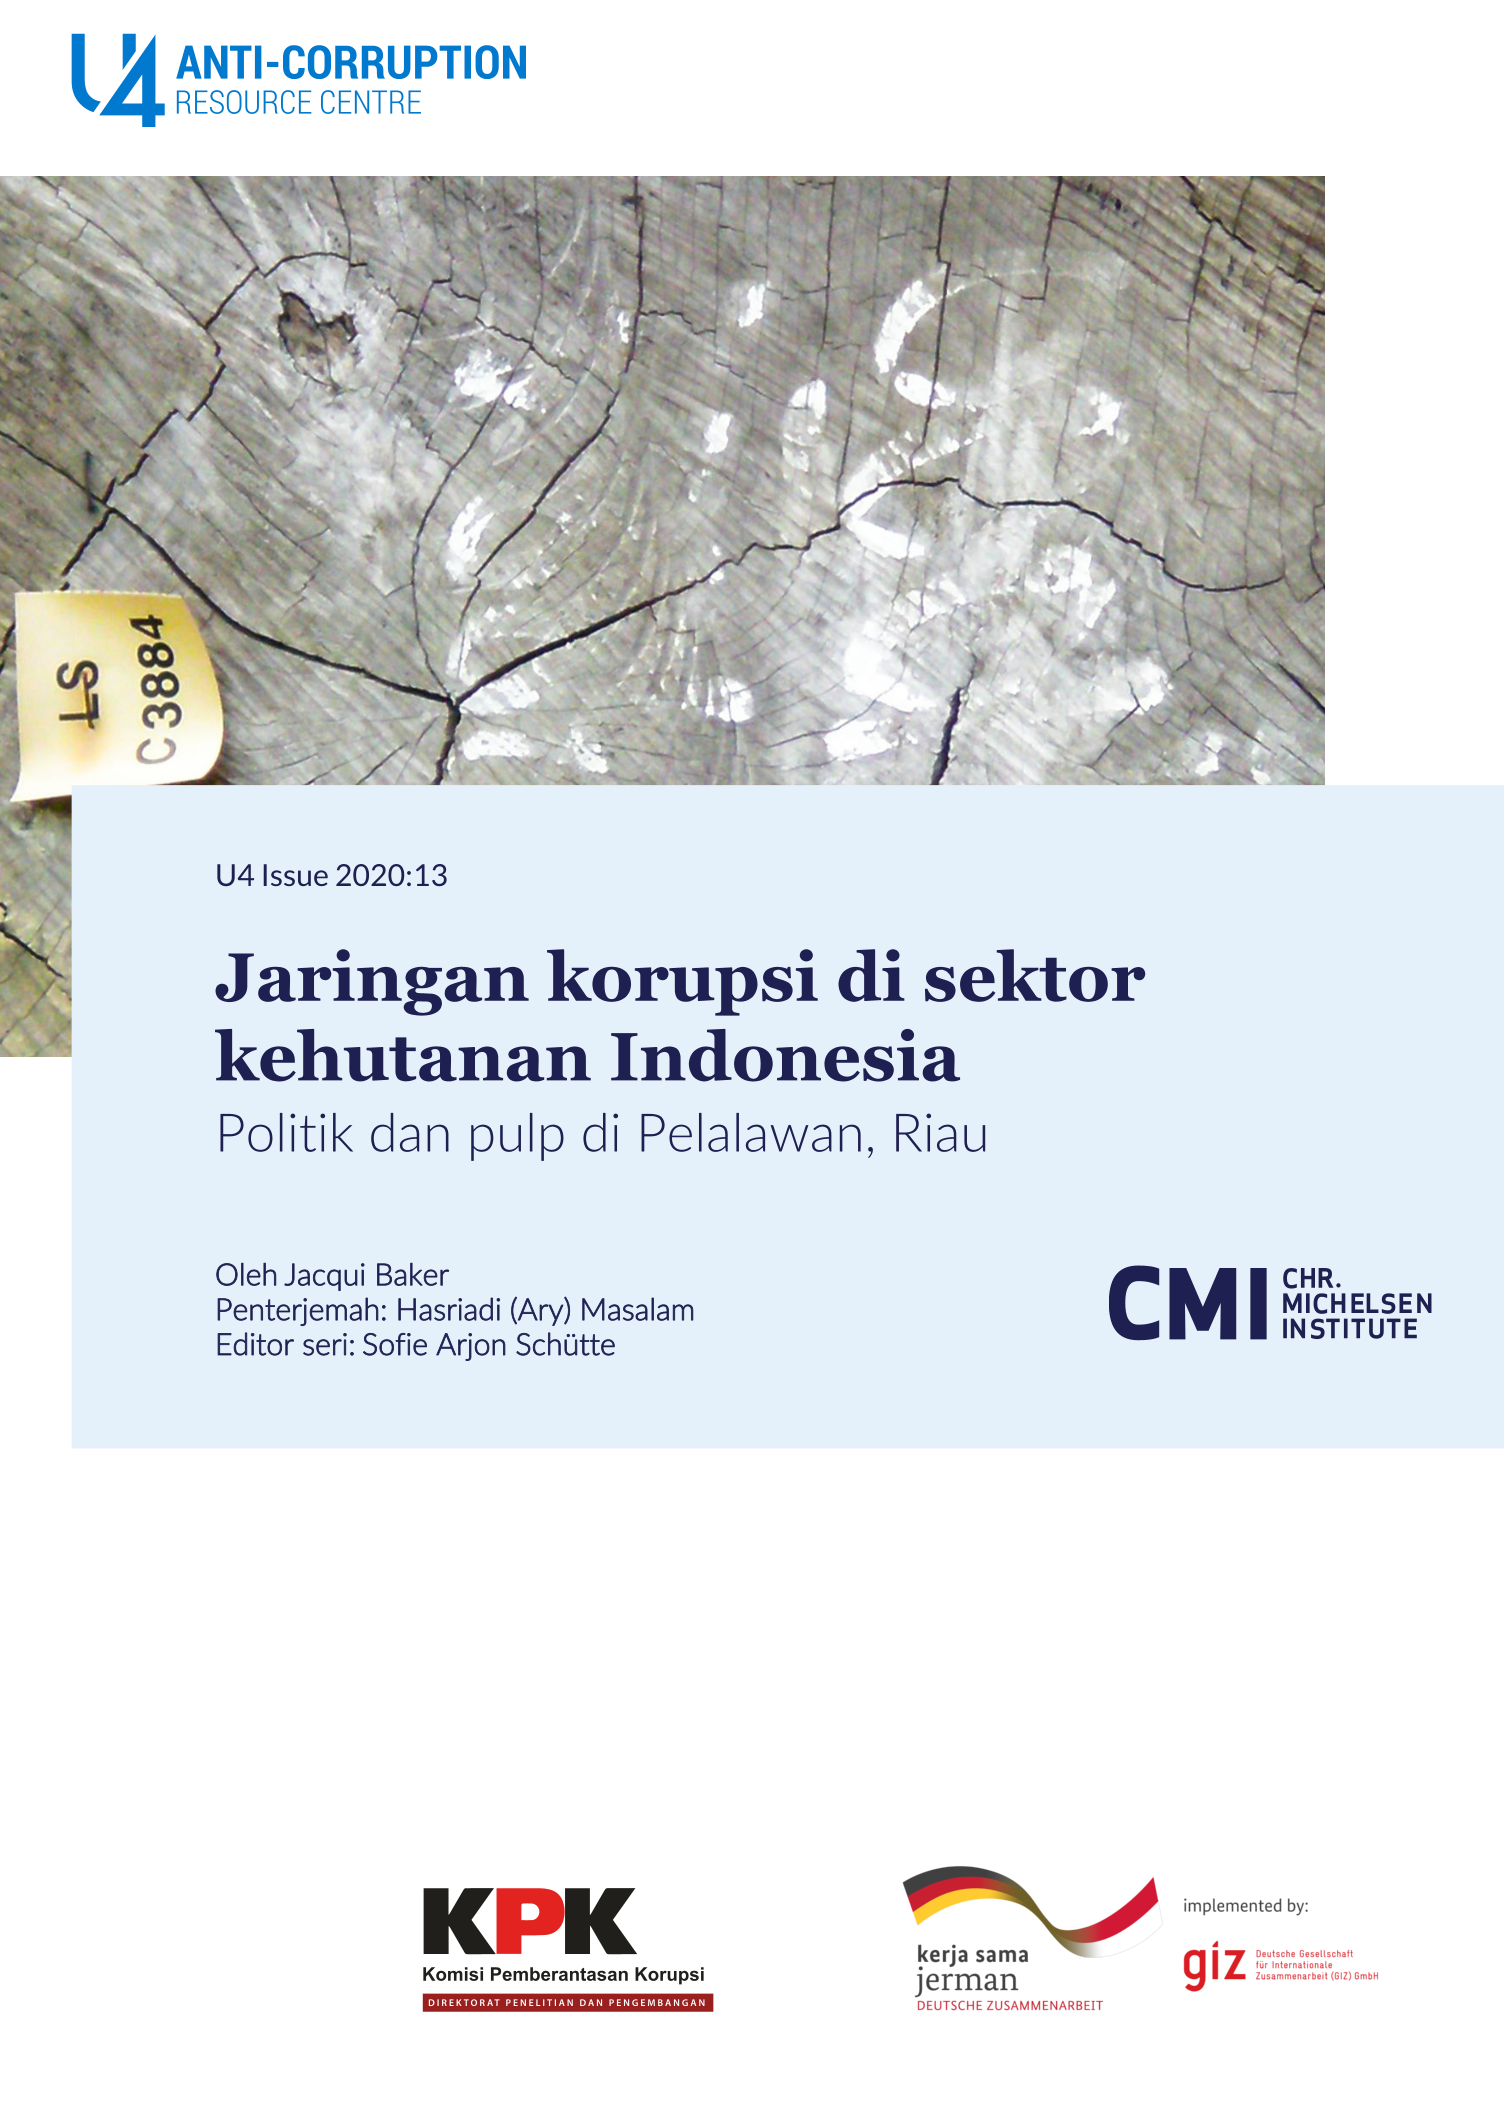 Jaringan korupsi di sektor kehutanan Indonesia